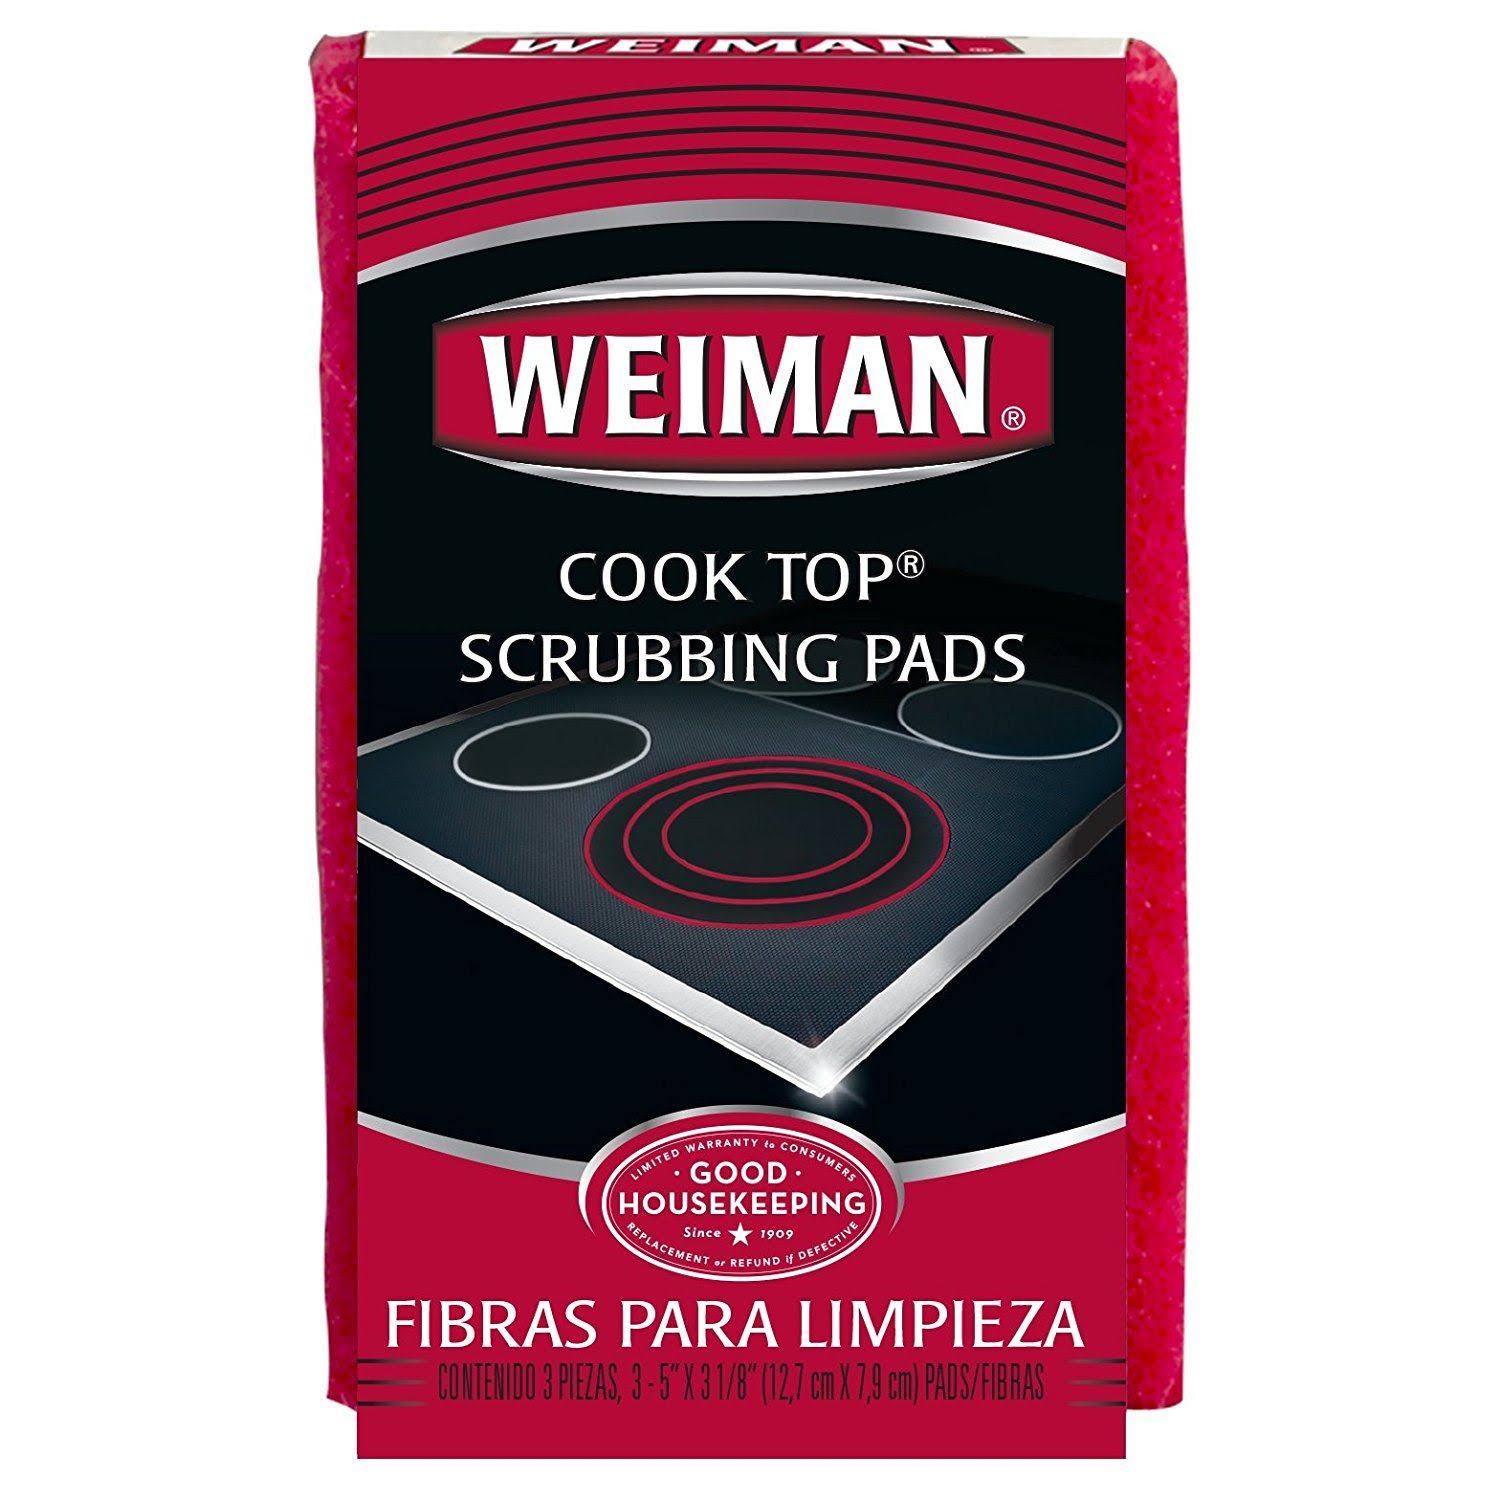 Weiman Cook Top Scrubbing Pads - 3 Pads